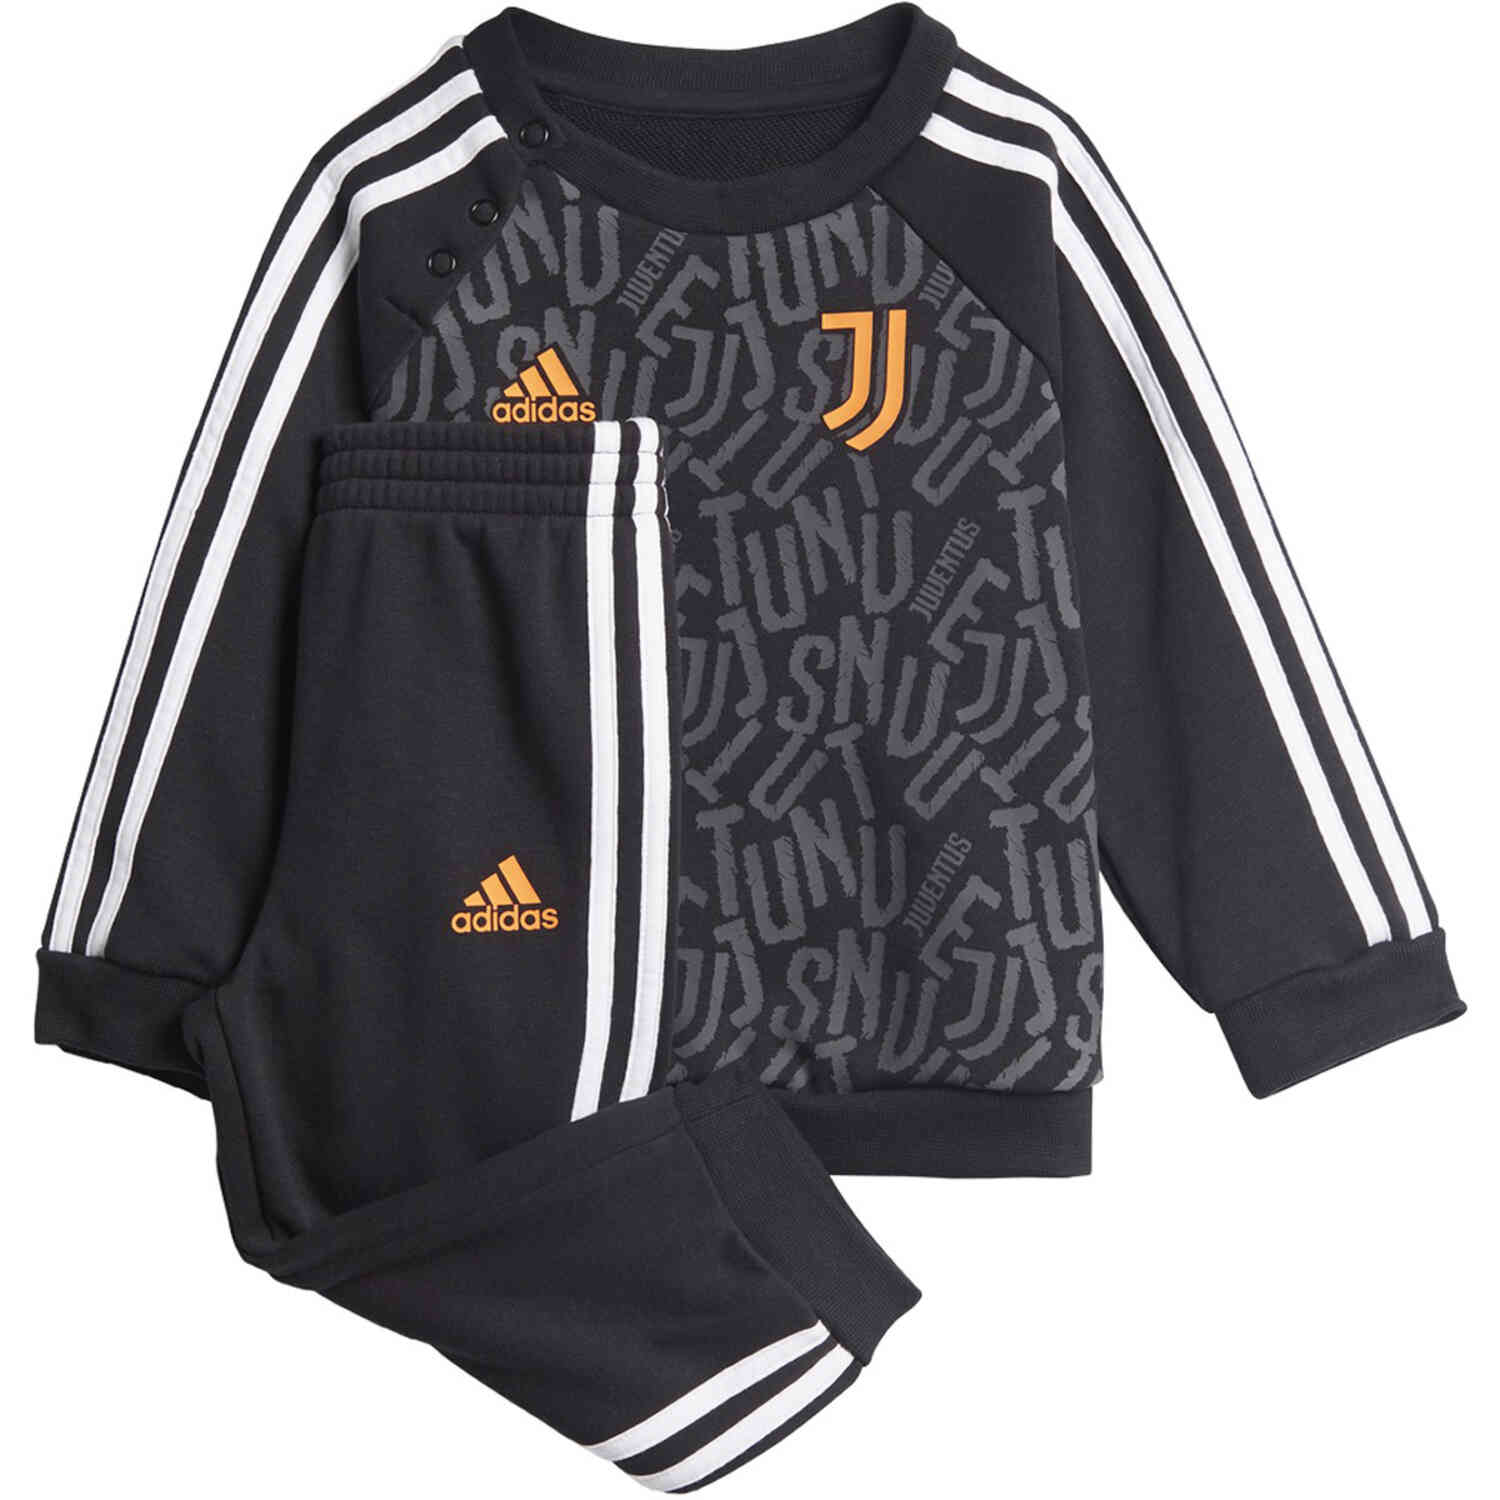 ik klaag Trolley Melodieus Infants adidas Juventus 3-Stripes Jogger - Black/White/App Signal Orange -  SoccerPro